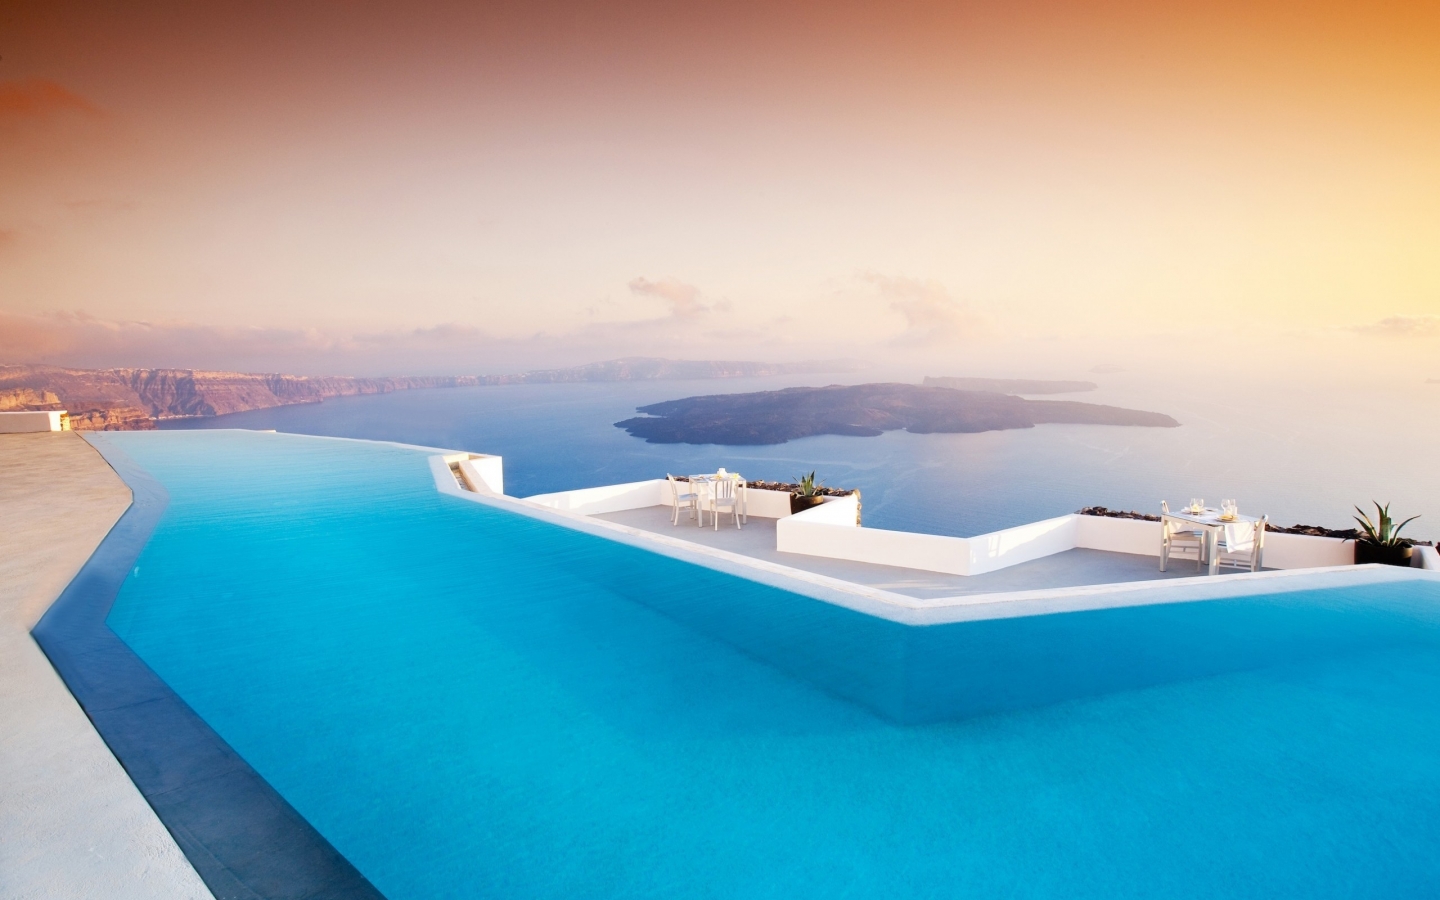 Santorini Pool for 1440 x 900 widescreen resolution